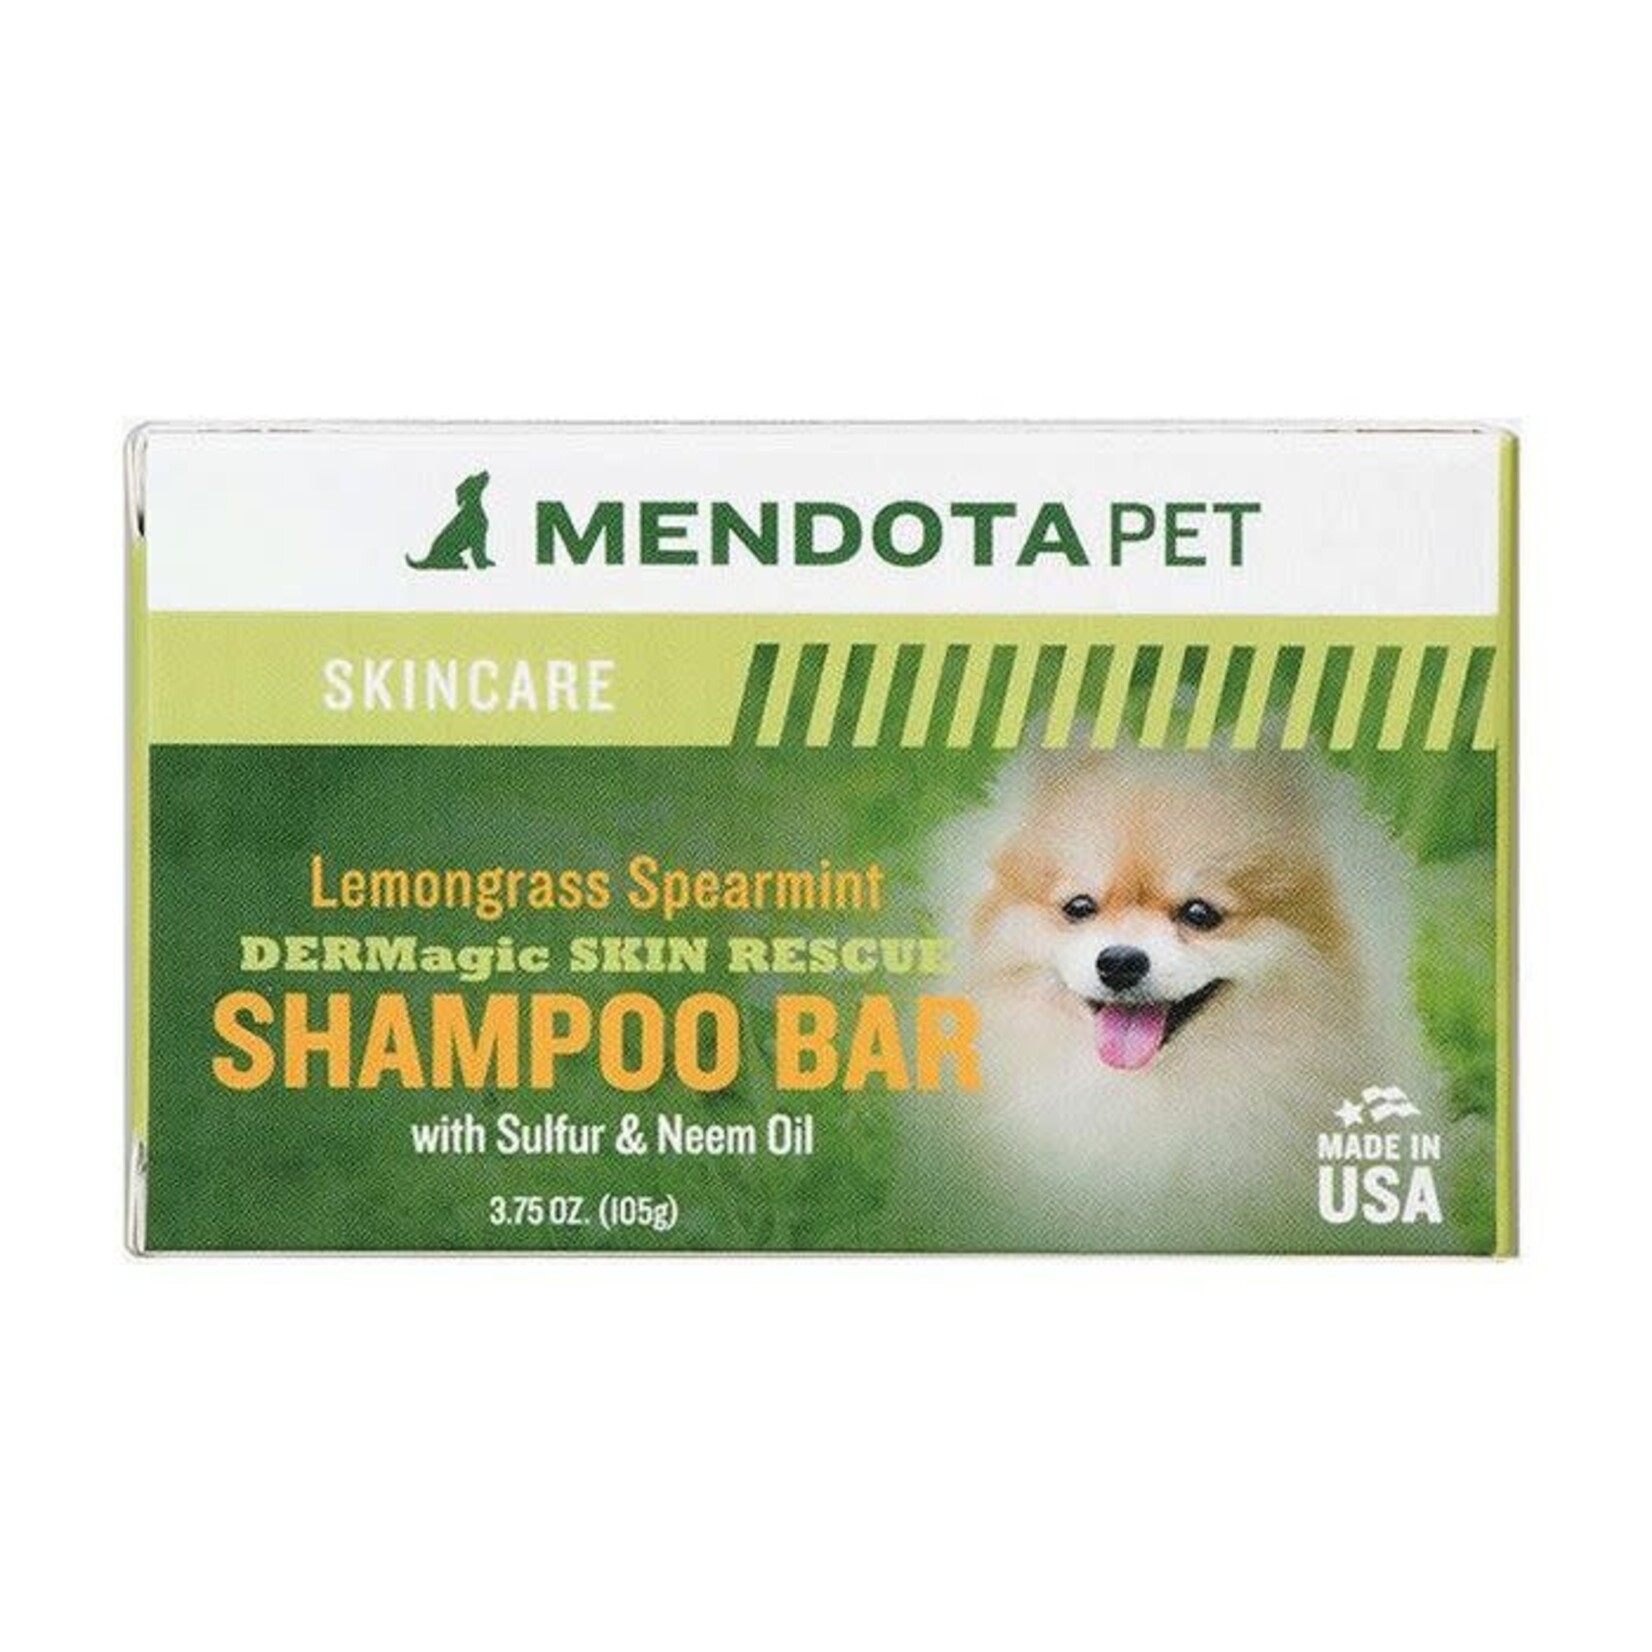 Dermagic Skin Rescue Shampoo Bar